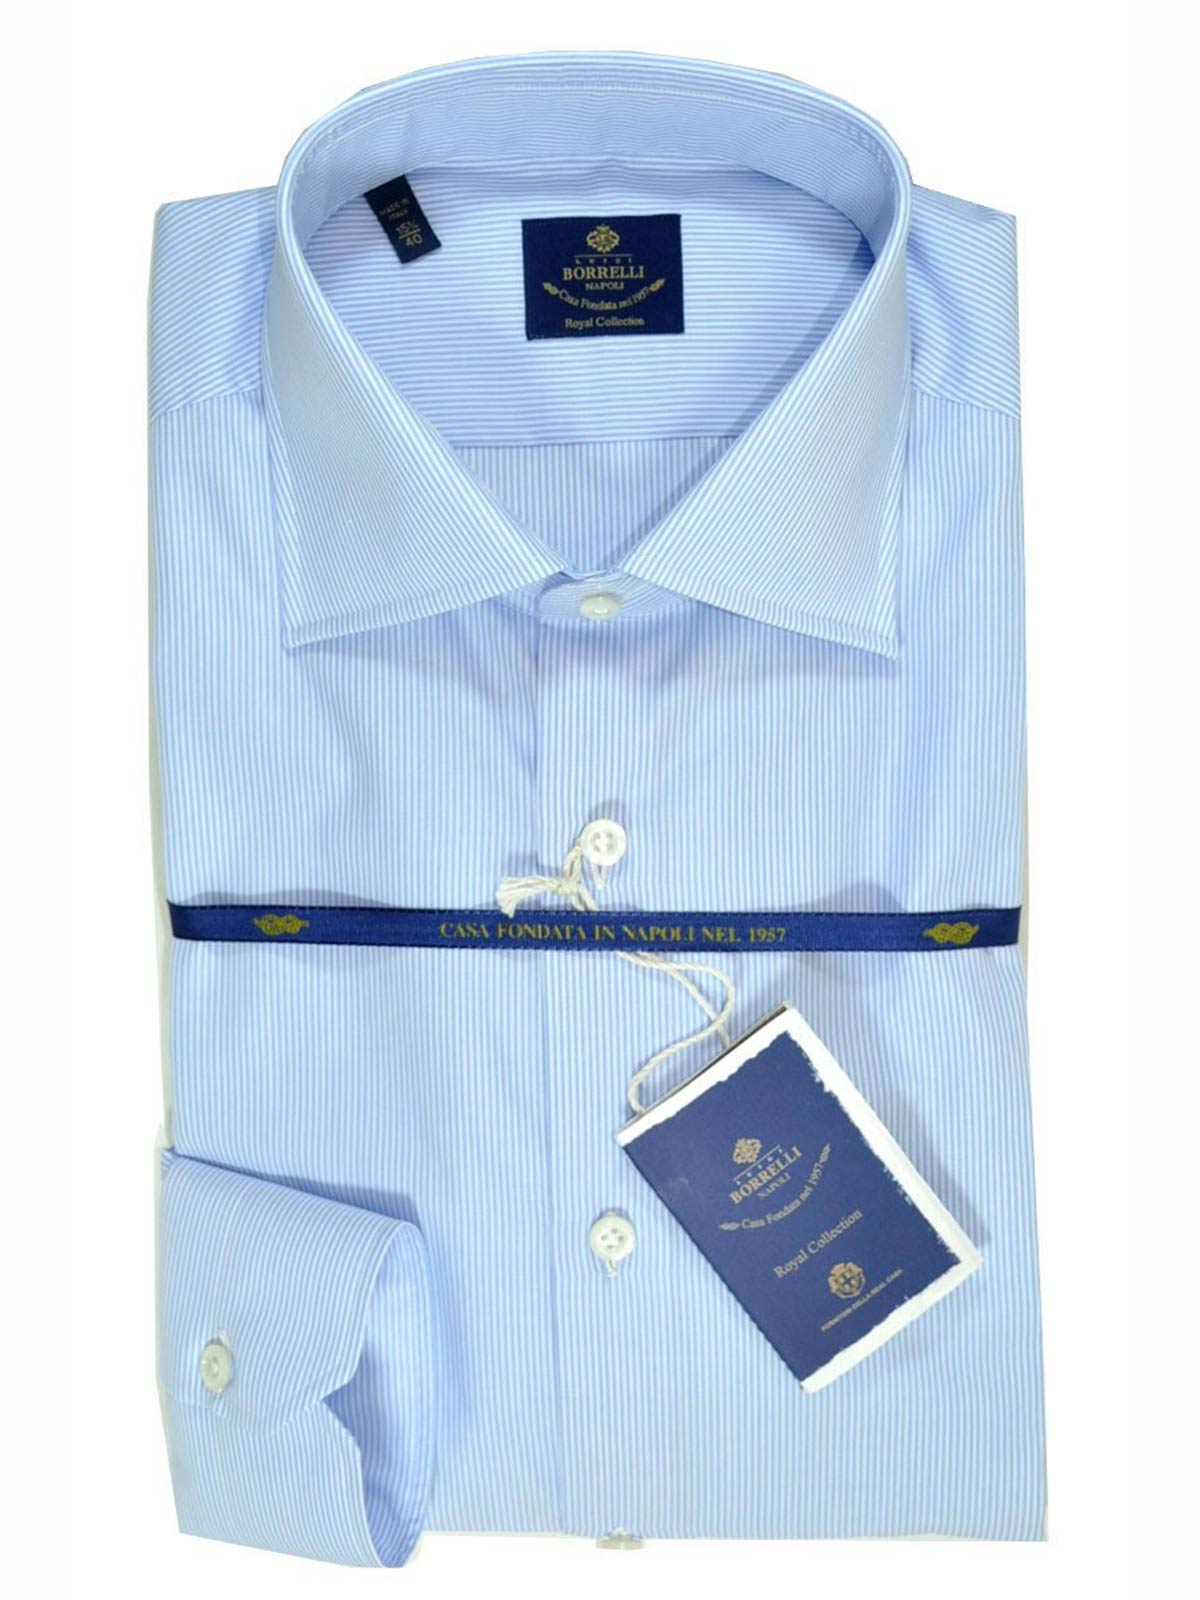 Luigi Borrelli Dress Shirt ROYAL COLLECTION White Blue Stripes Design